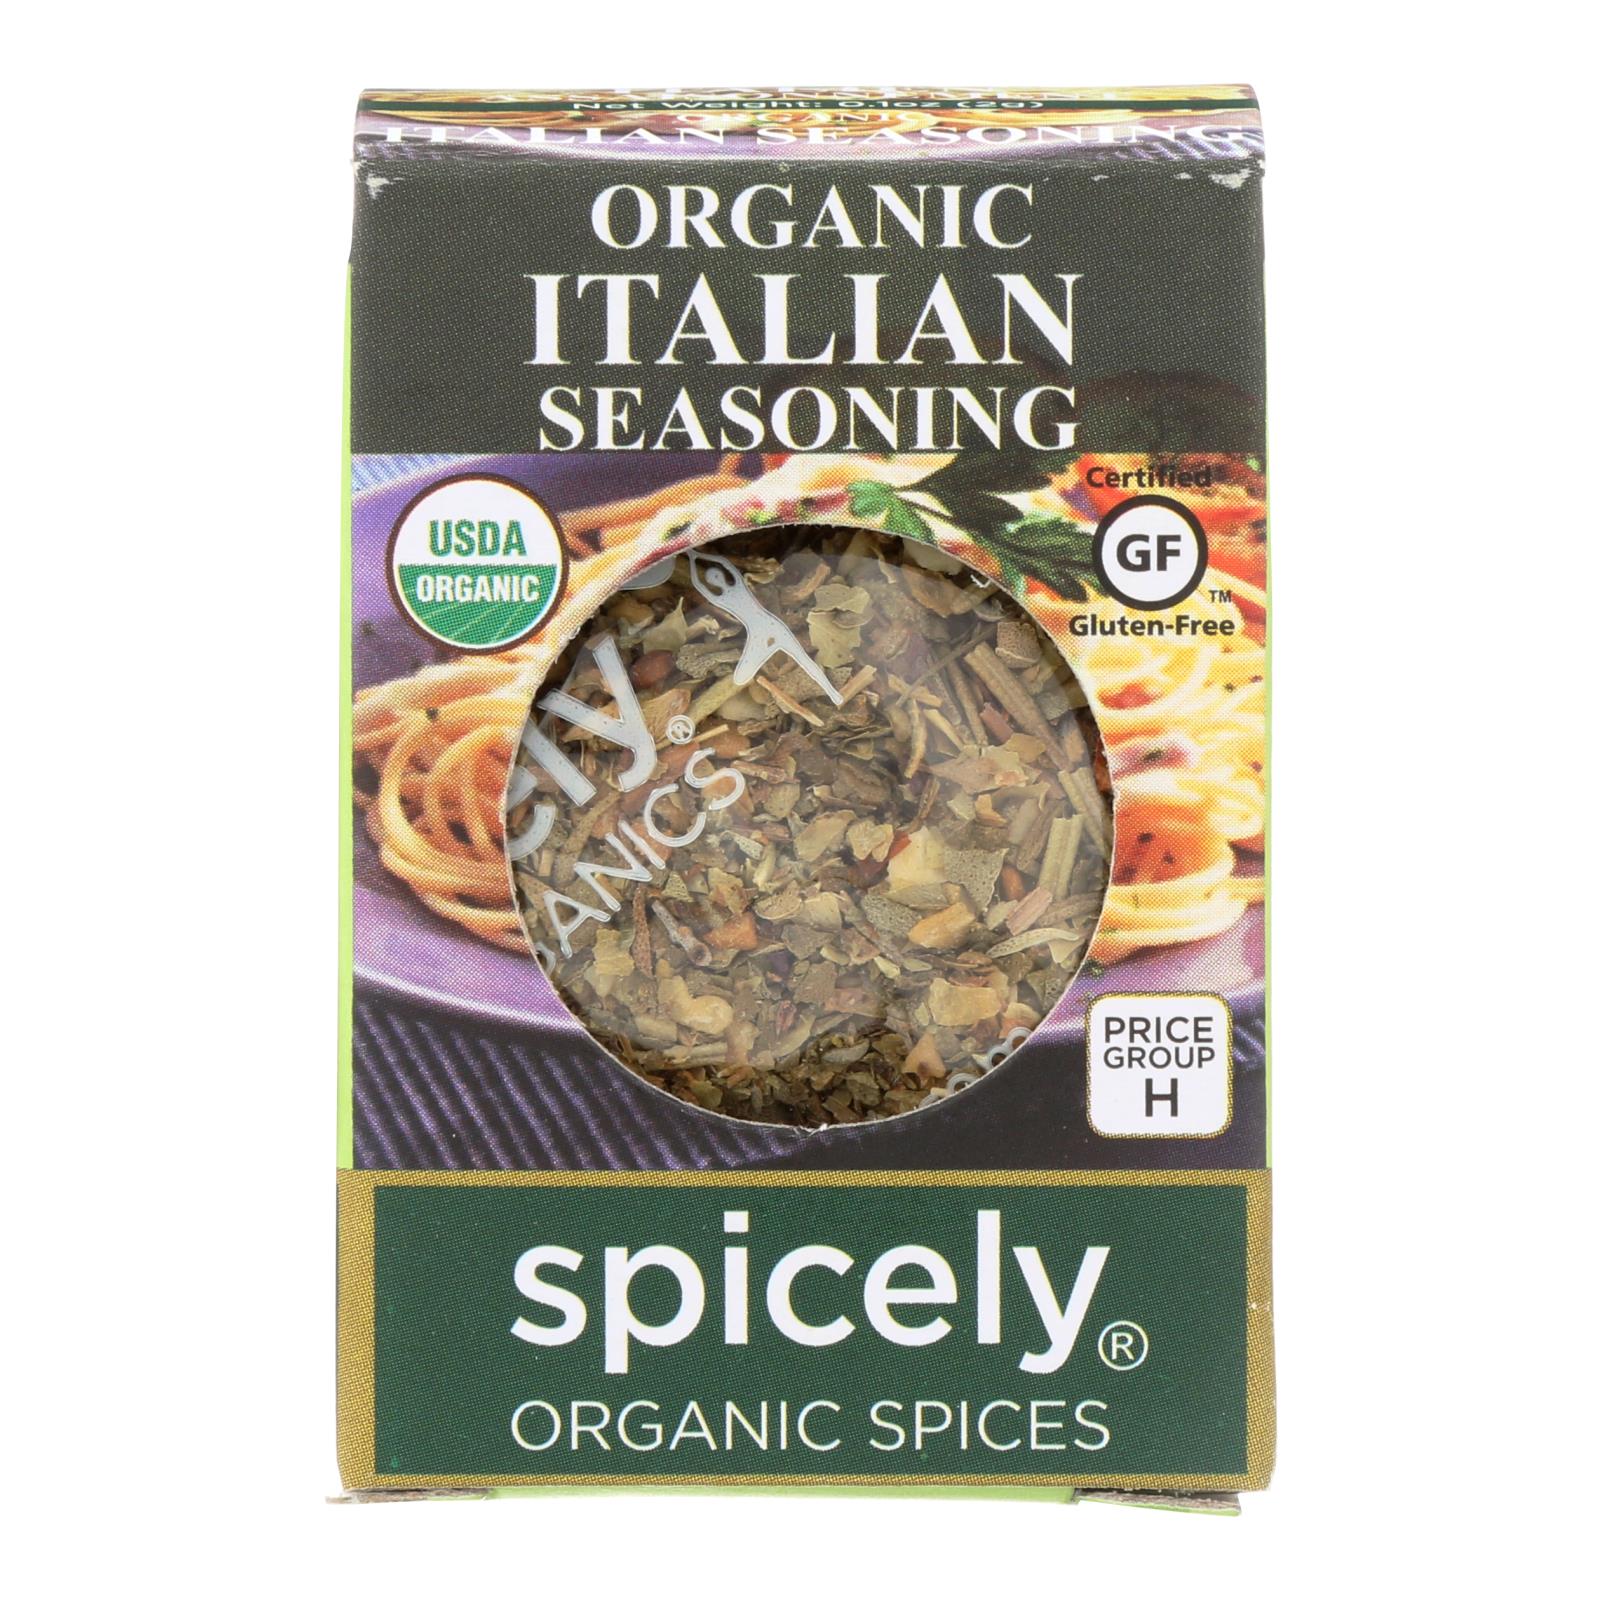 Spicely Organics - Organic Italian Seasoning - 6개 묶음상품 - 0.1 oz.